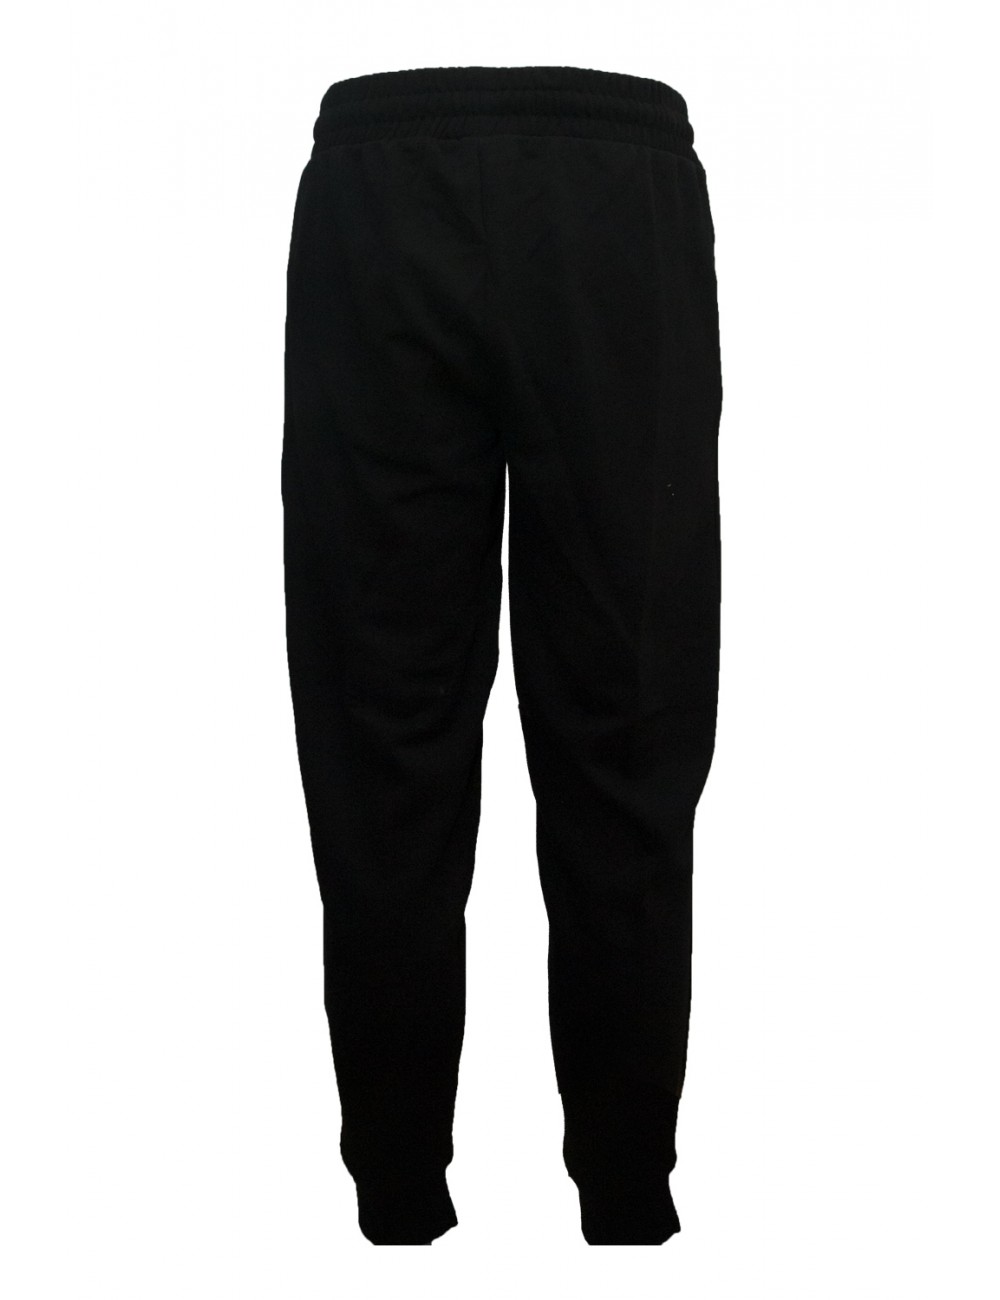 pantalone tuta john richmond UOMO BLACK - UMP24240PA OF vista frontale